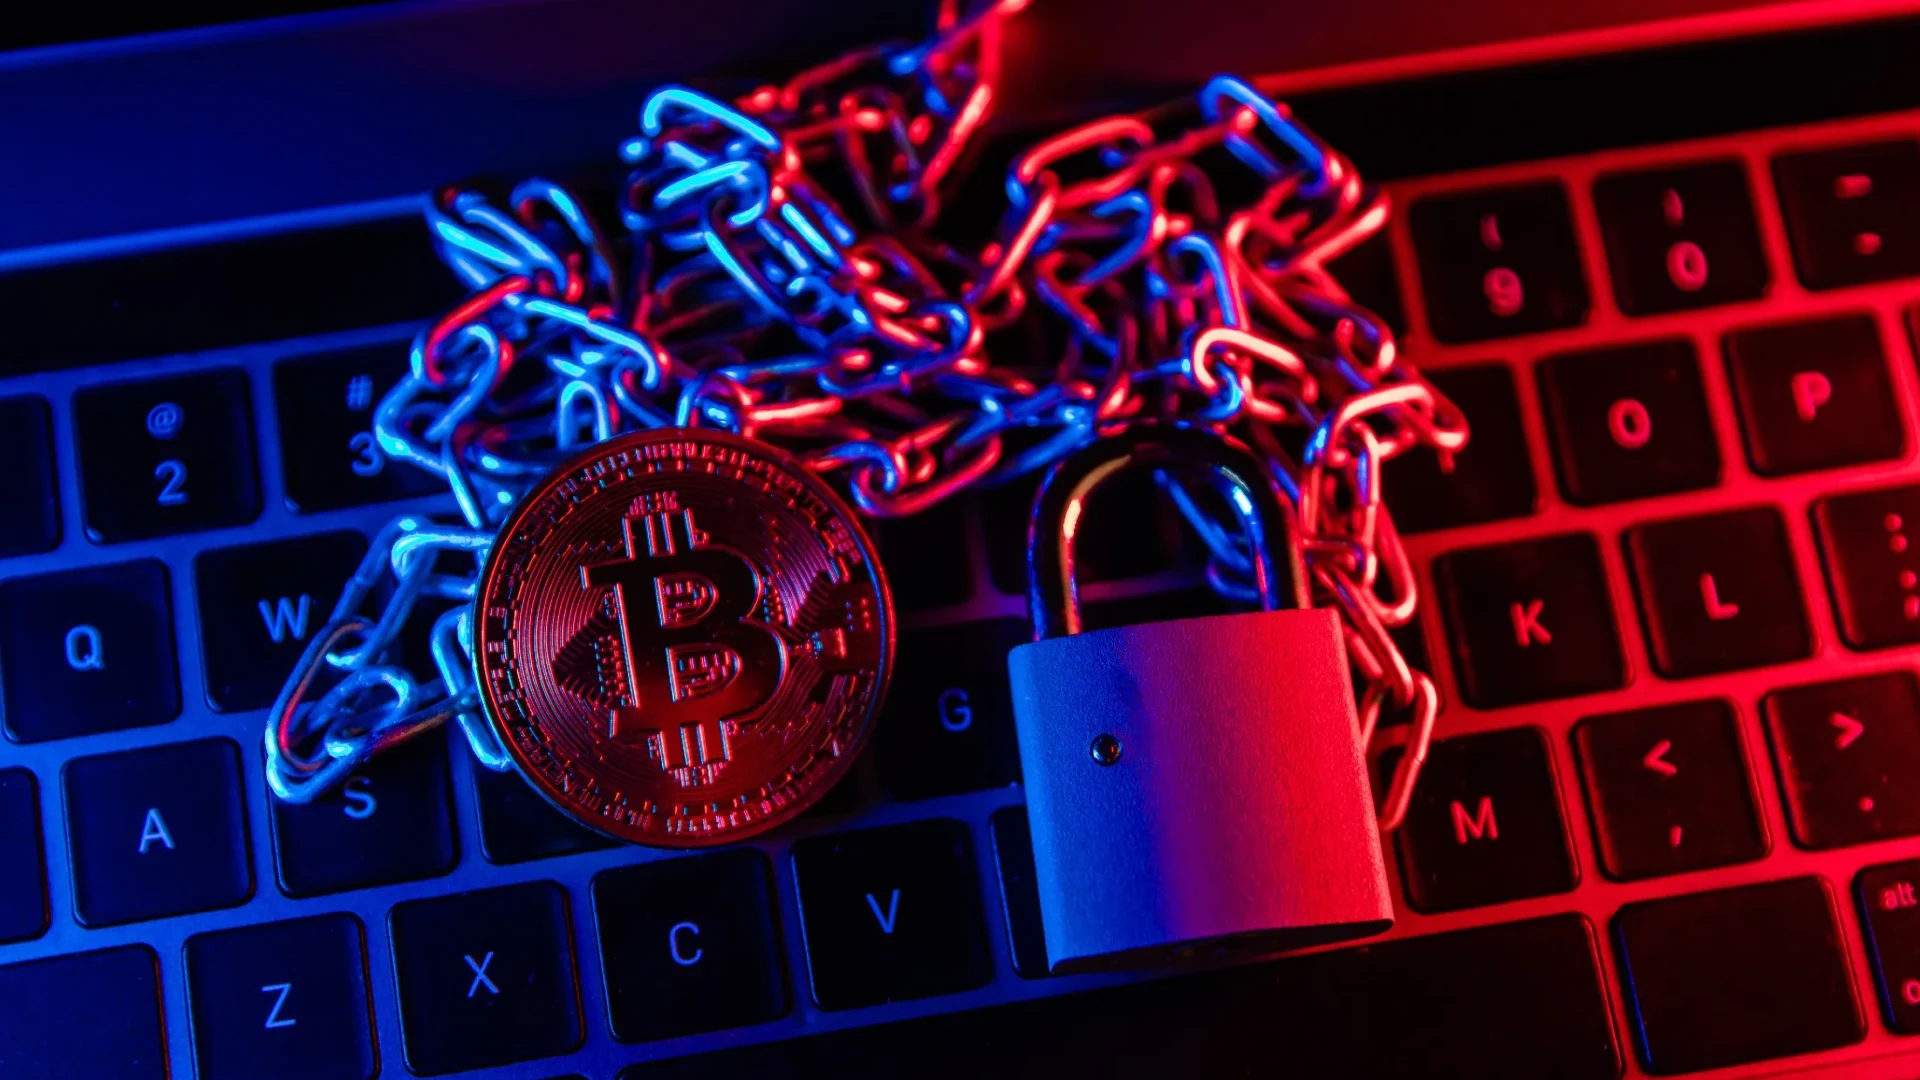 Cross-chain token bridge ‘Nomad’ compromised, $200M stolen so far: Report.